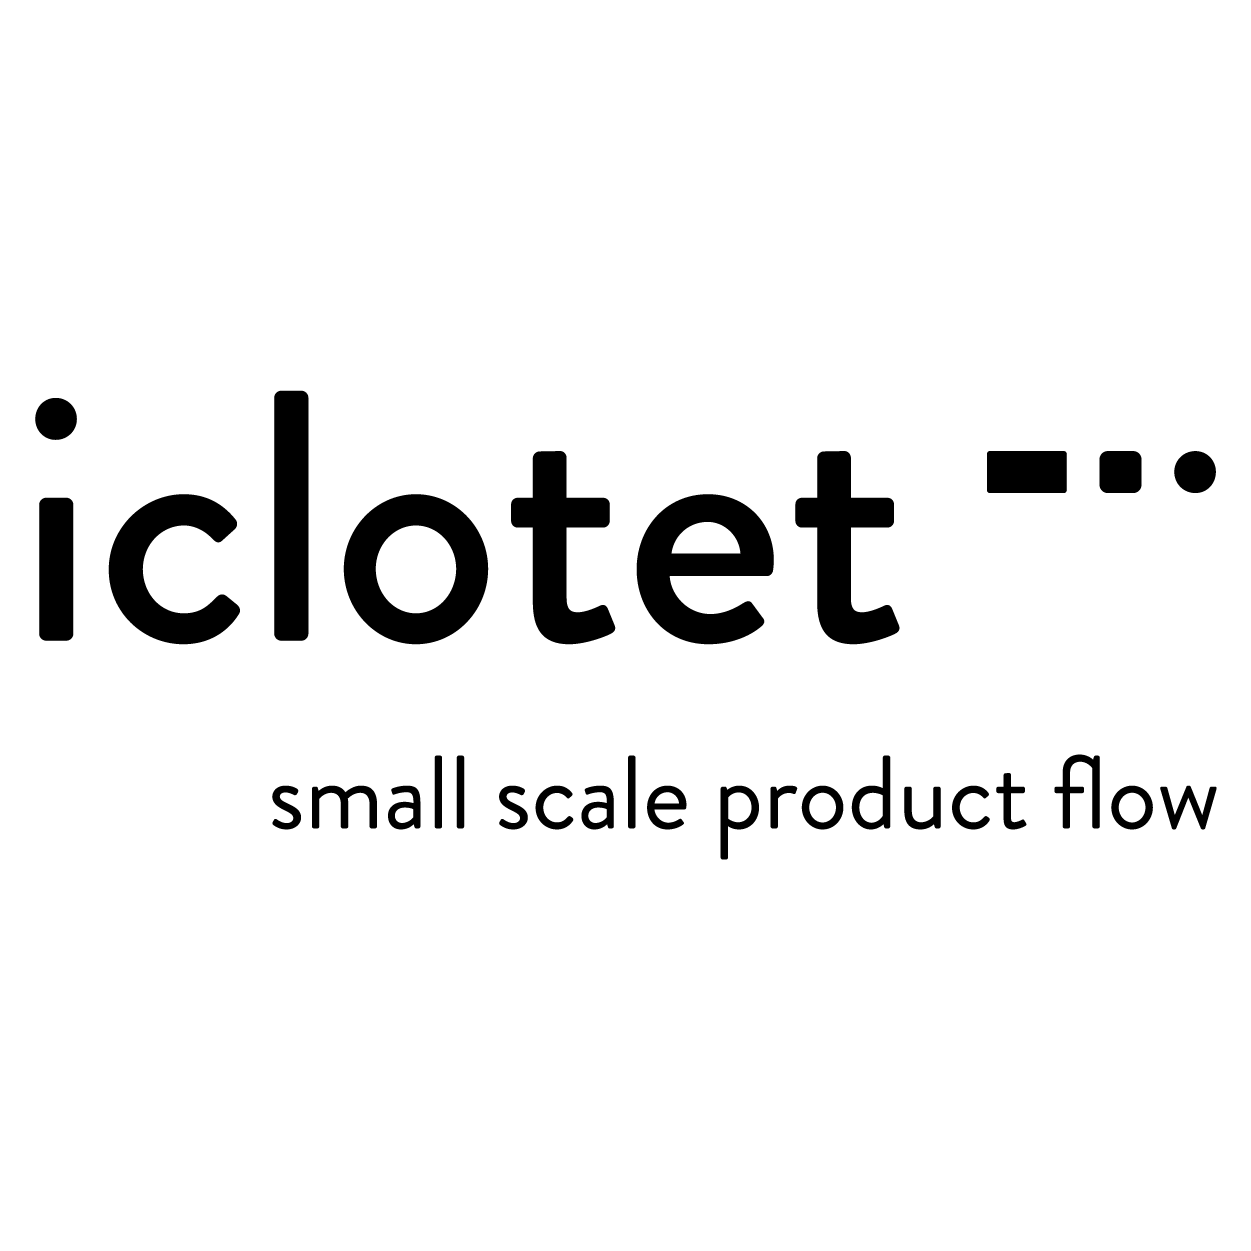 (c) Iclotet.com